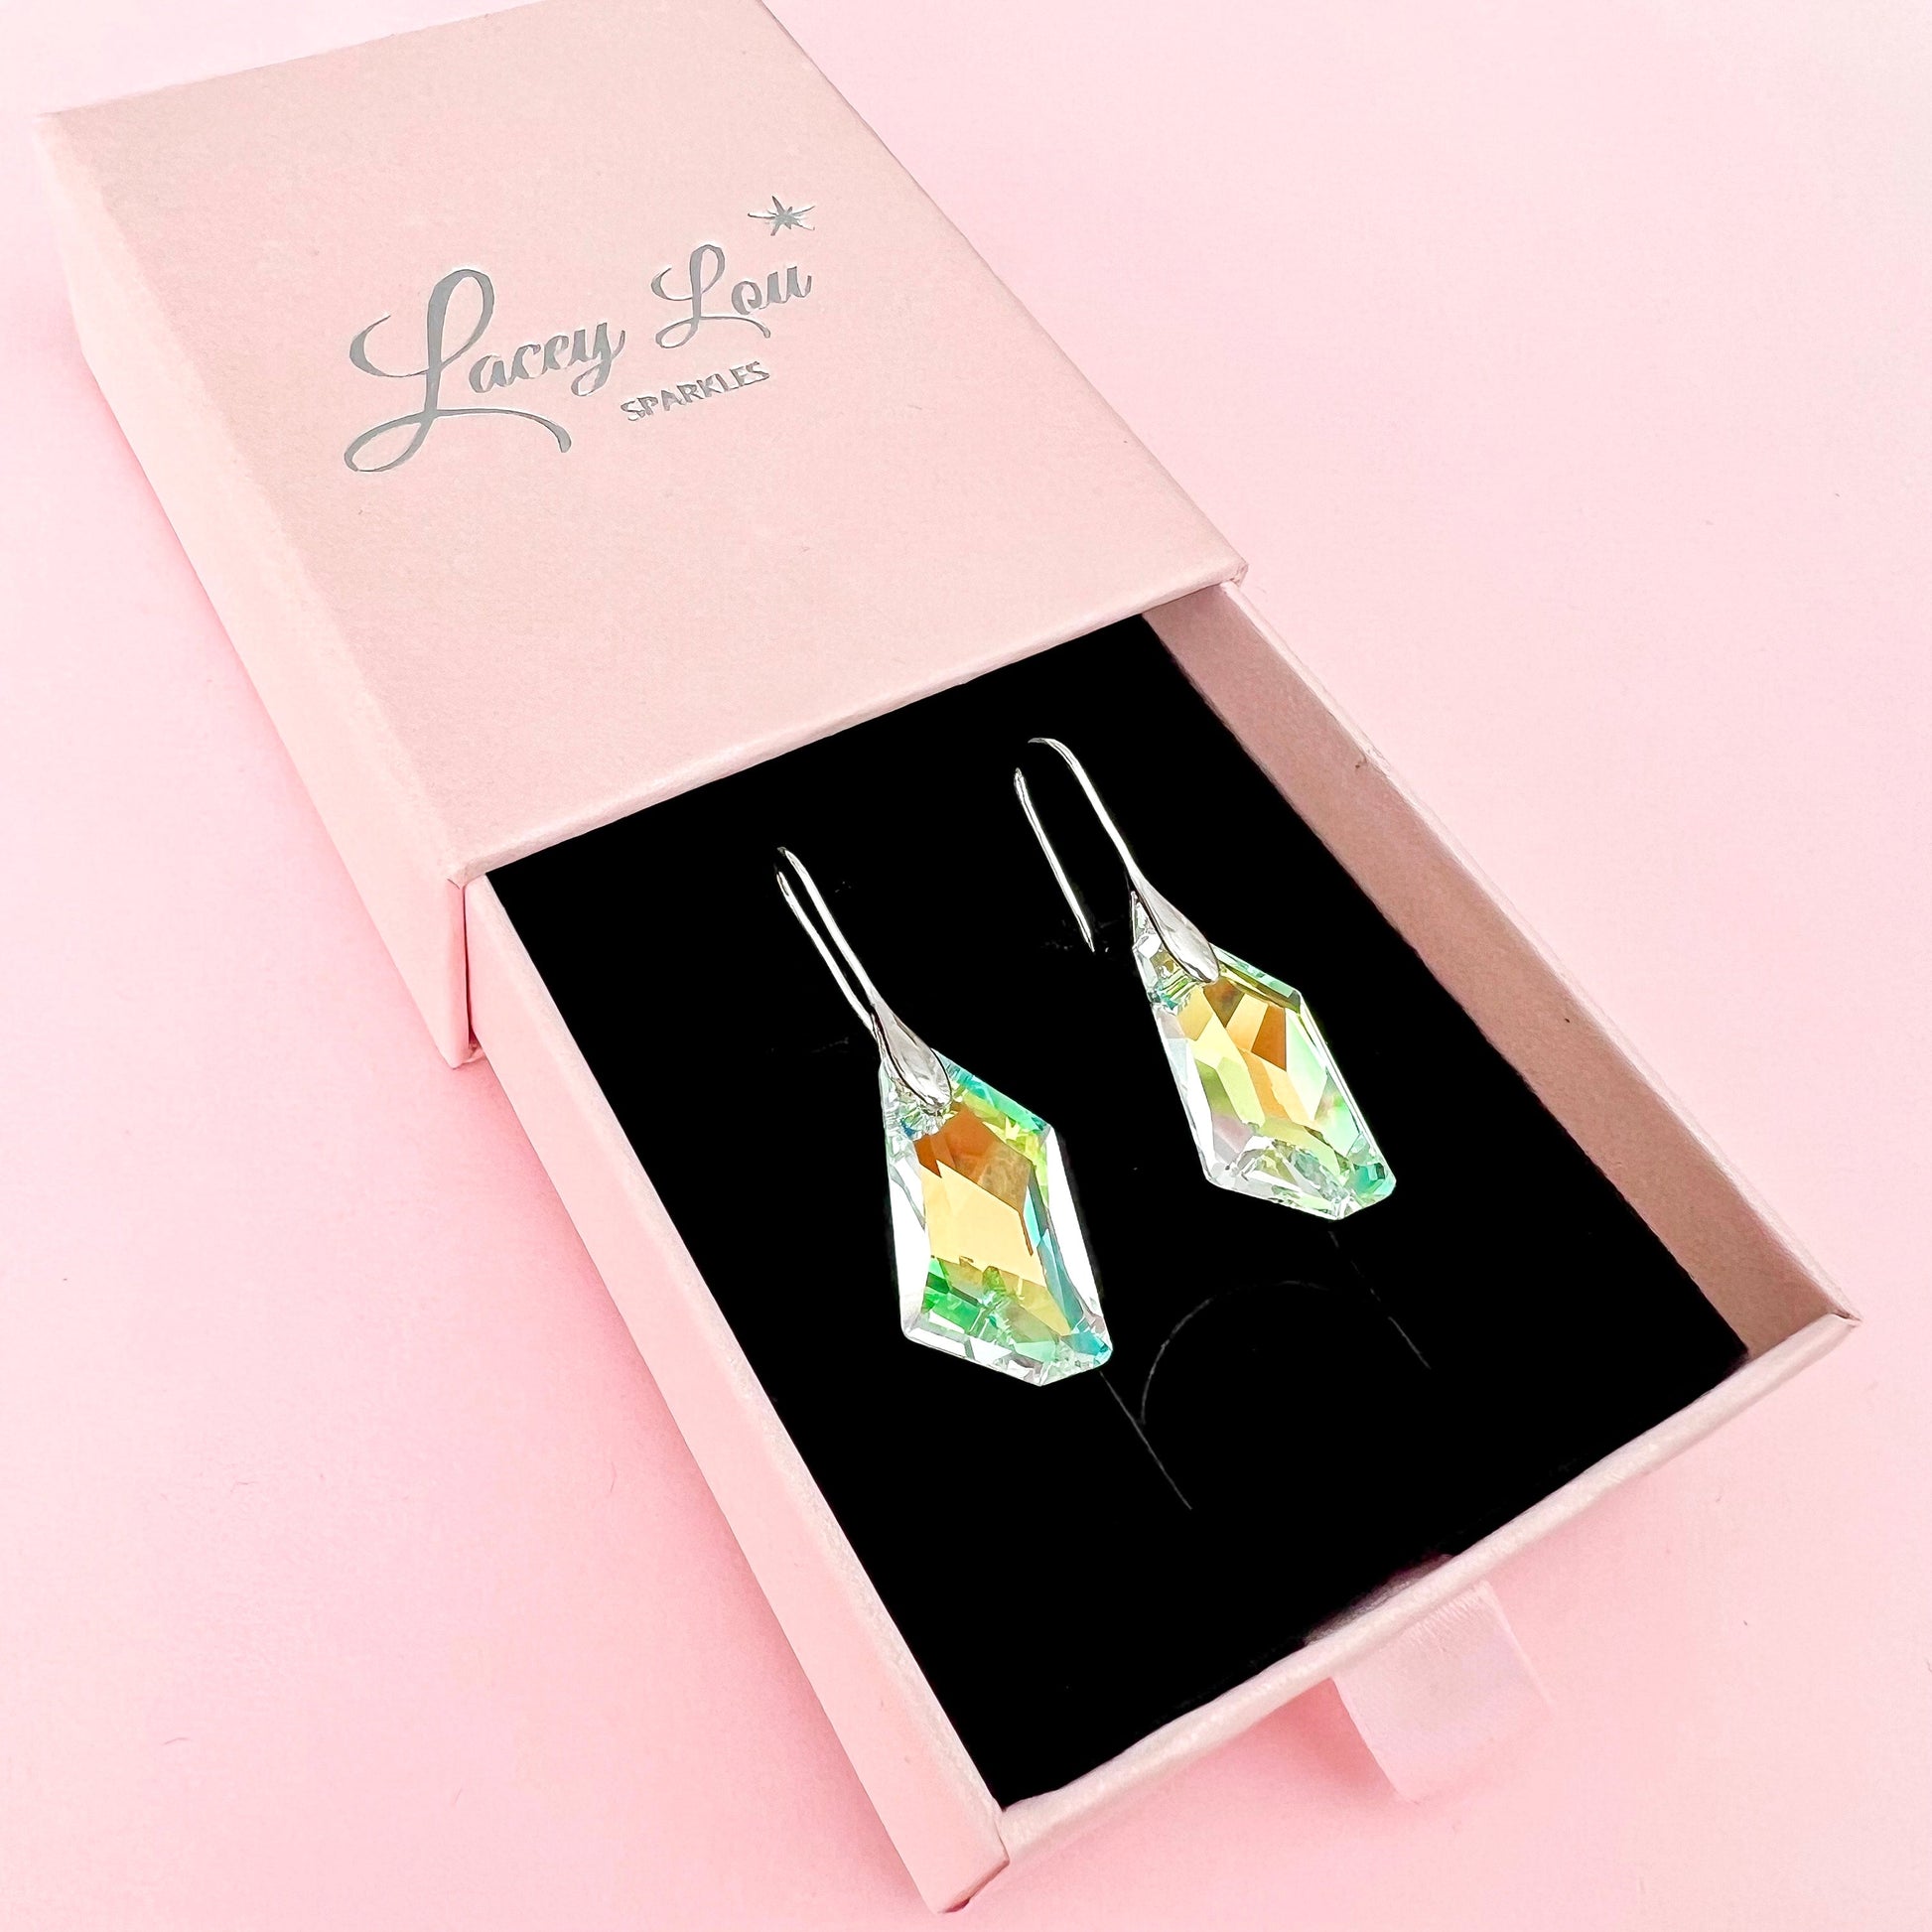 AB Iridescent De-art Austrian Crystal Hook Earrings - Lacey Lou Sparkles